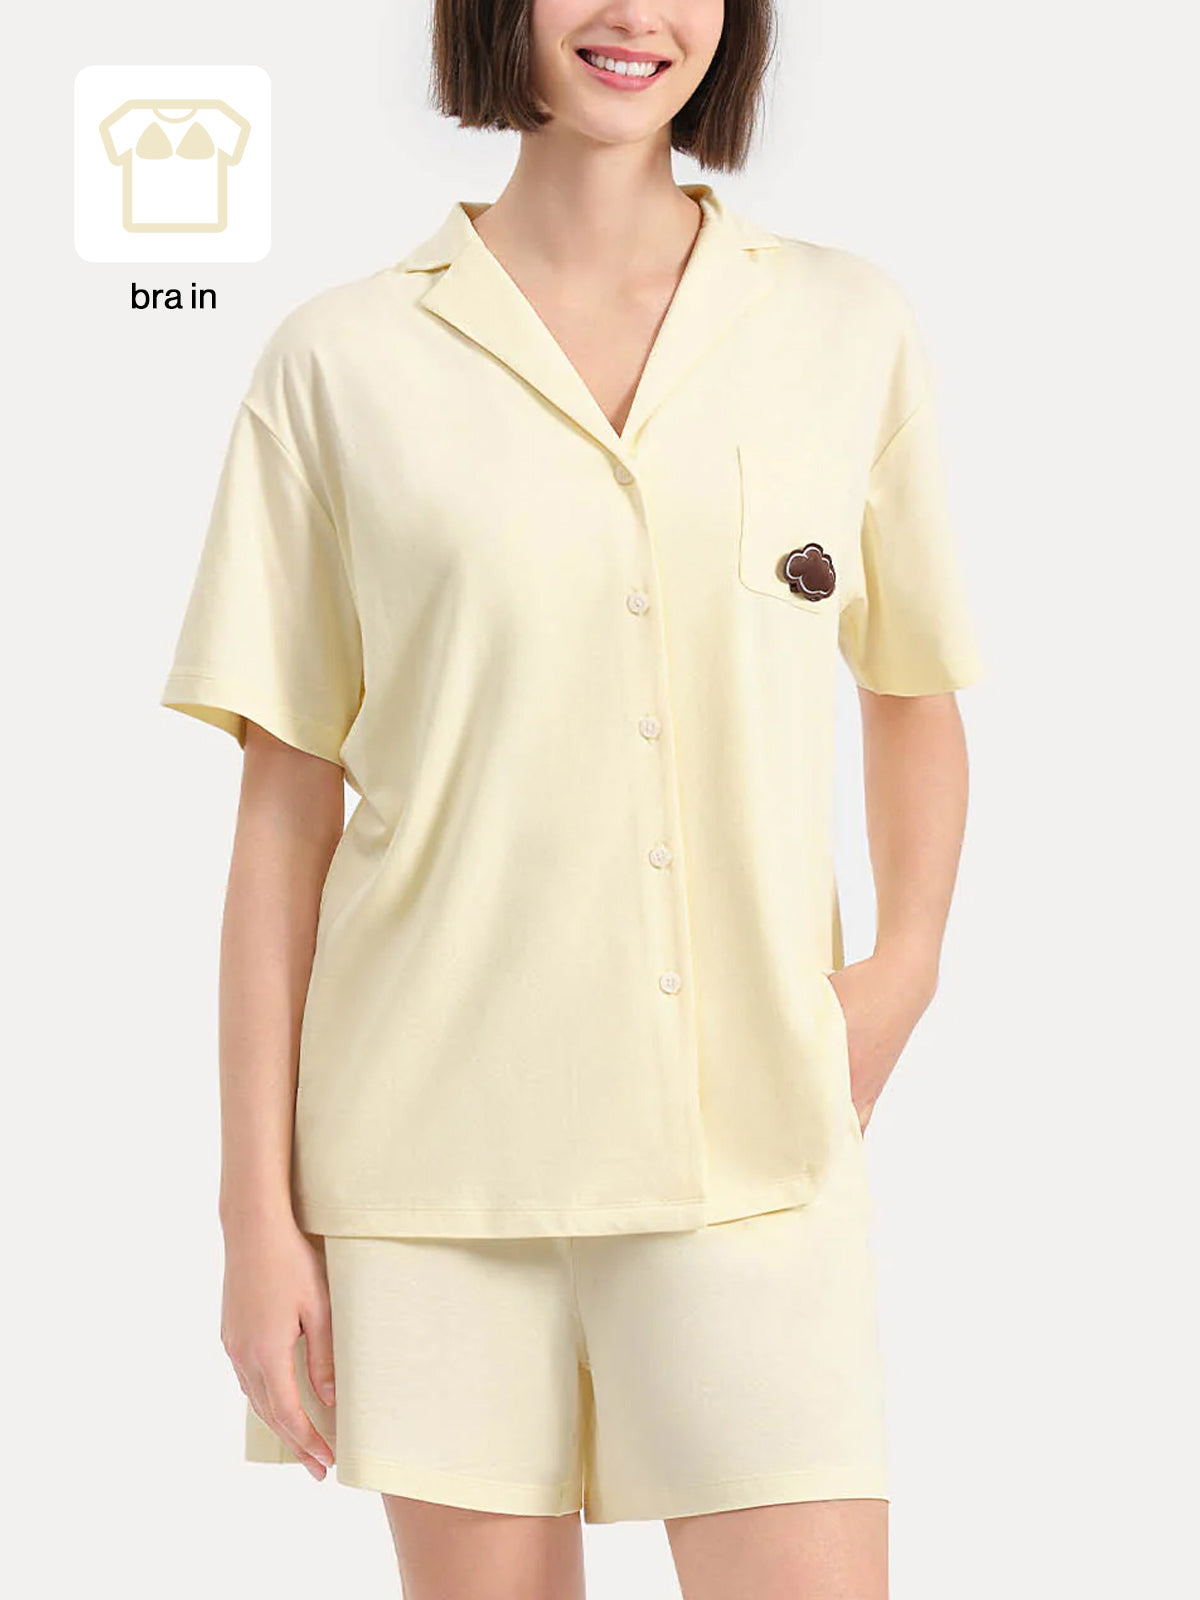 Cotton Short Sleeve Pajama Set